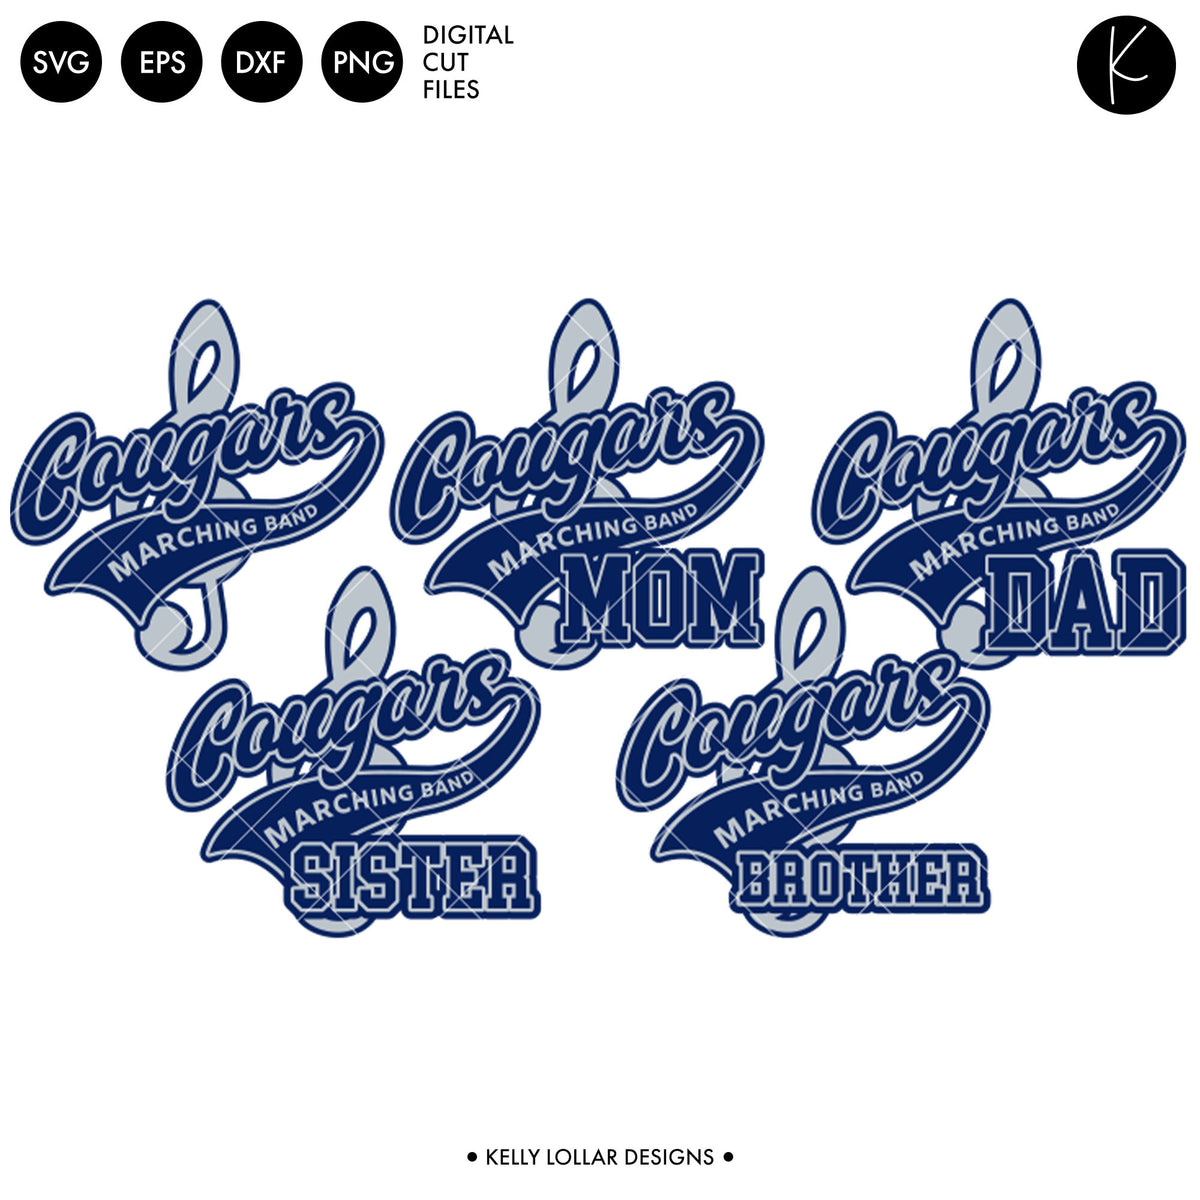 Cougars Band Bundle | SVG DXF EPS PNG Cut Files